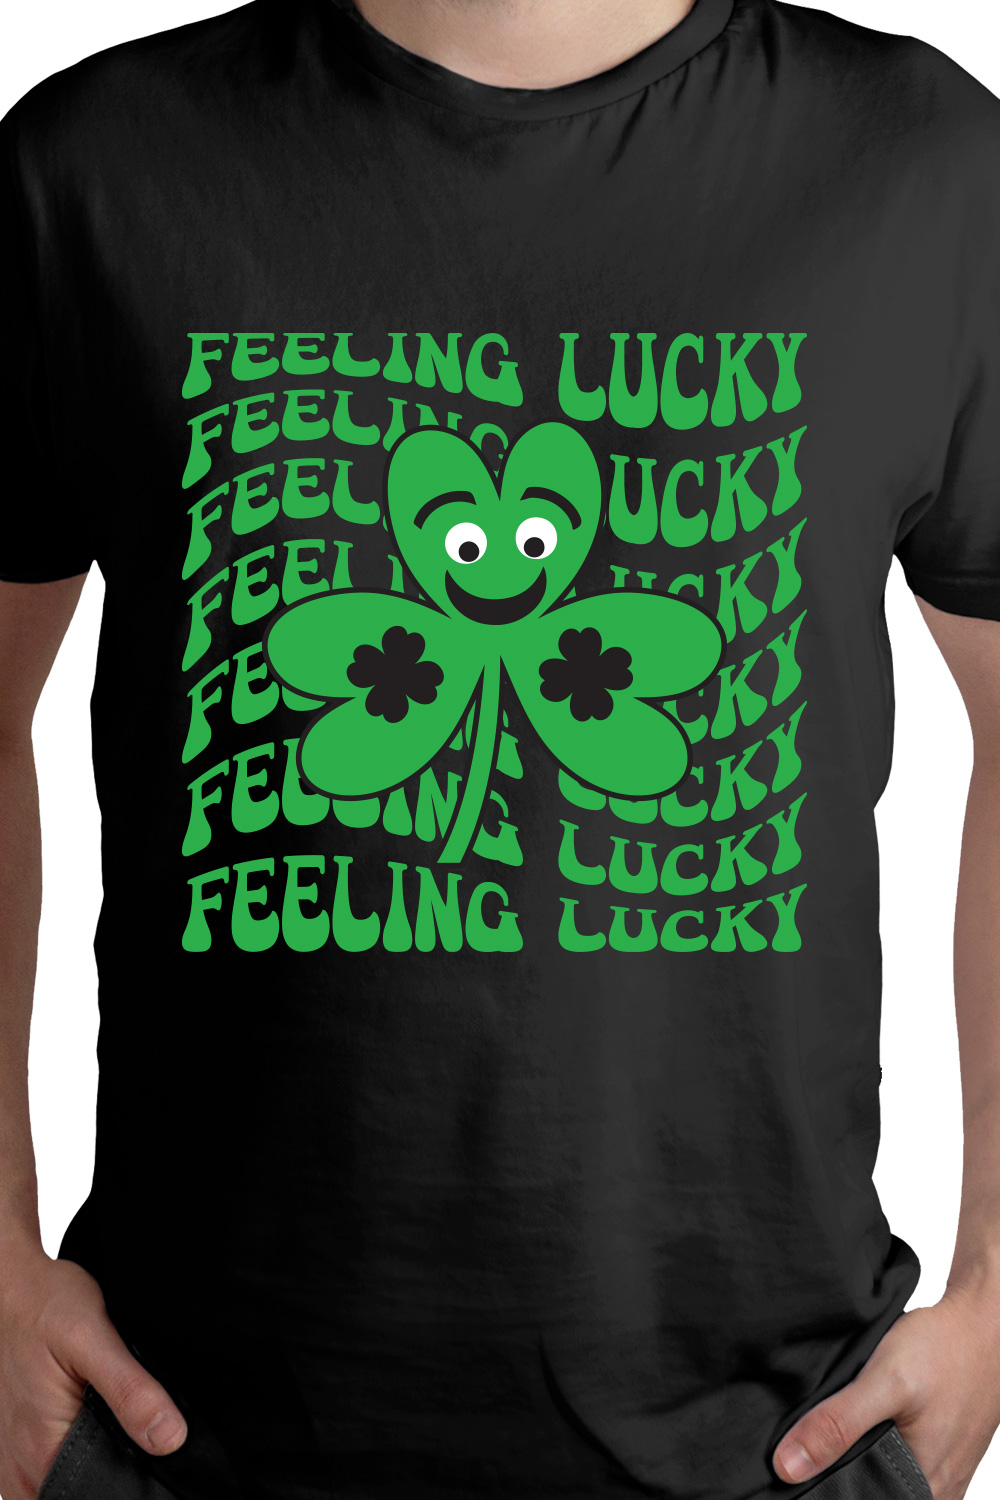 Feeling lucky, St Patrick\'s day t-shirt design pinterest preview image.